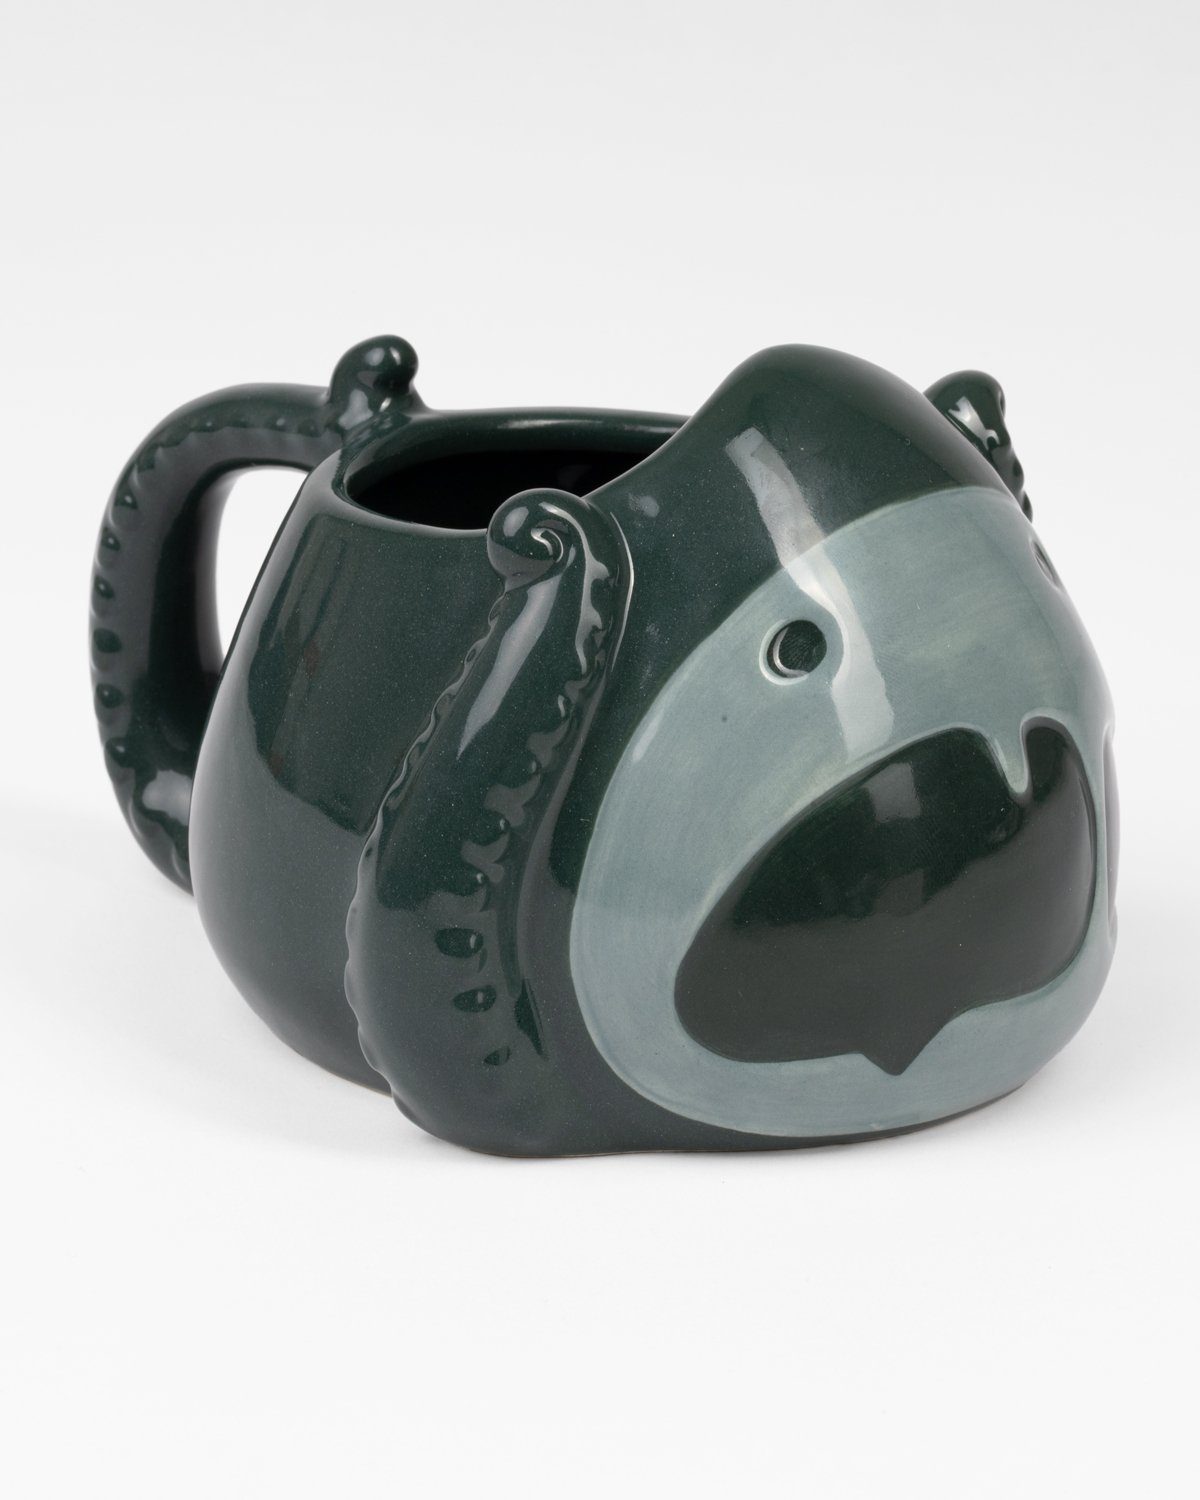 iTEMLAB Tasse Overwatch 2 figural Mug Becher Pachimari 3D Keramiktasse HALLOWEEN